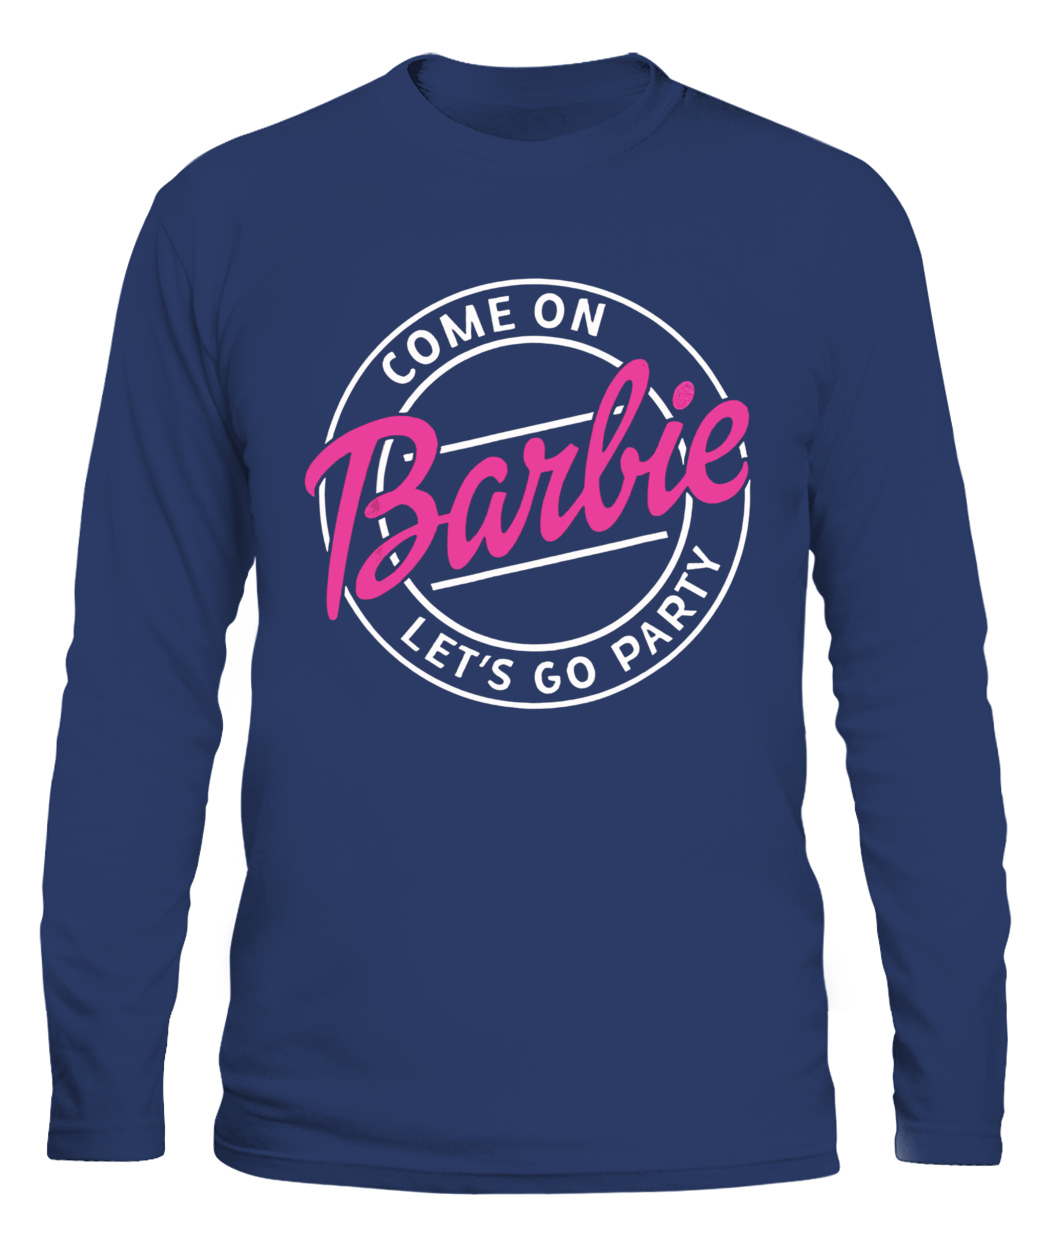 Funny barbenheimer Barbie x Oppenheimer Collaboration 2023 shirt - Limotees